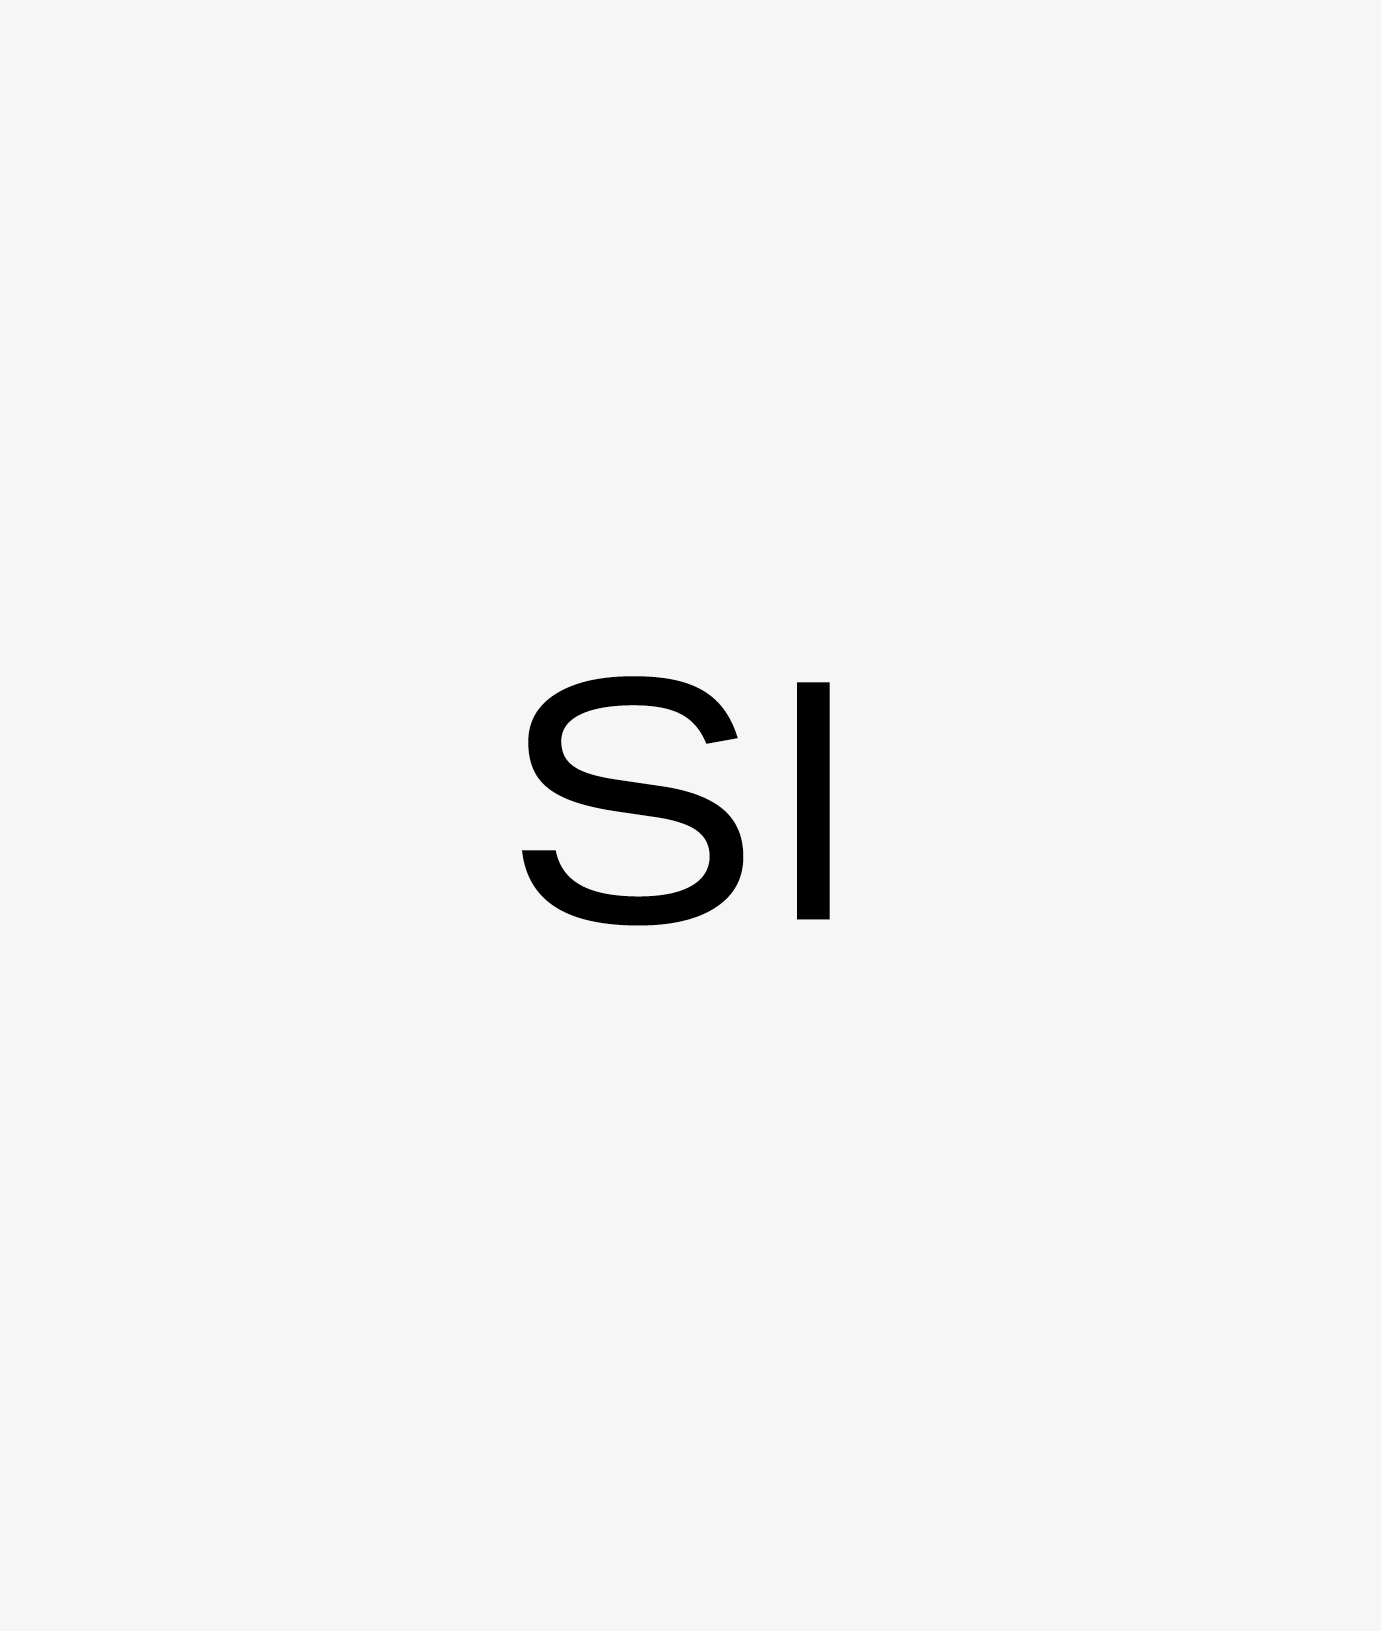 SI_Monogram